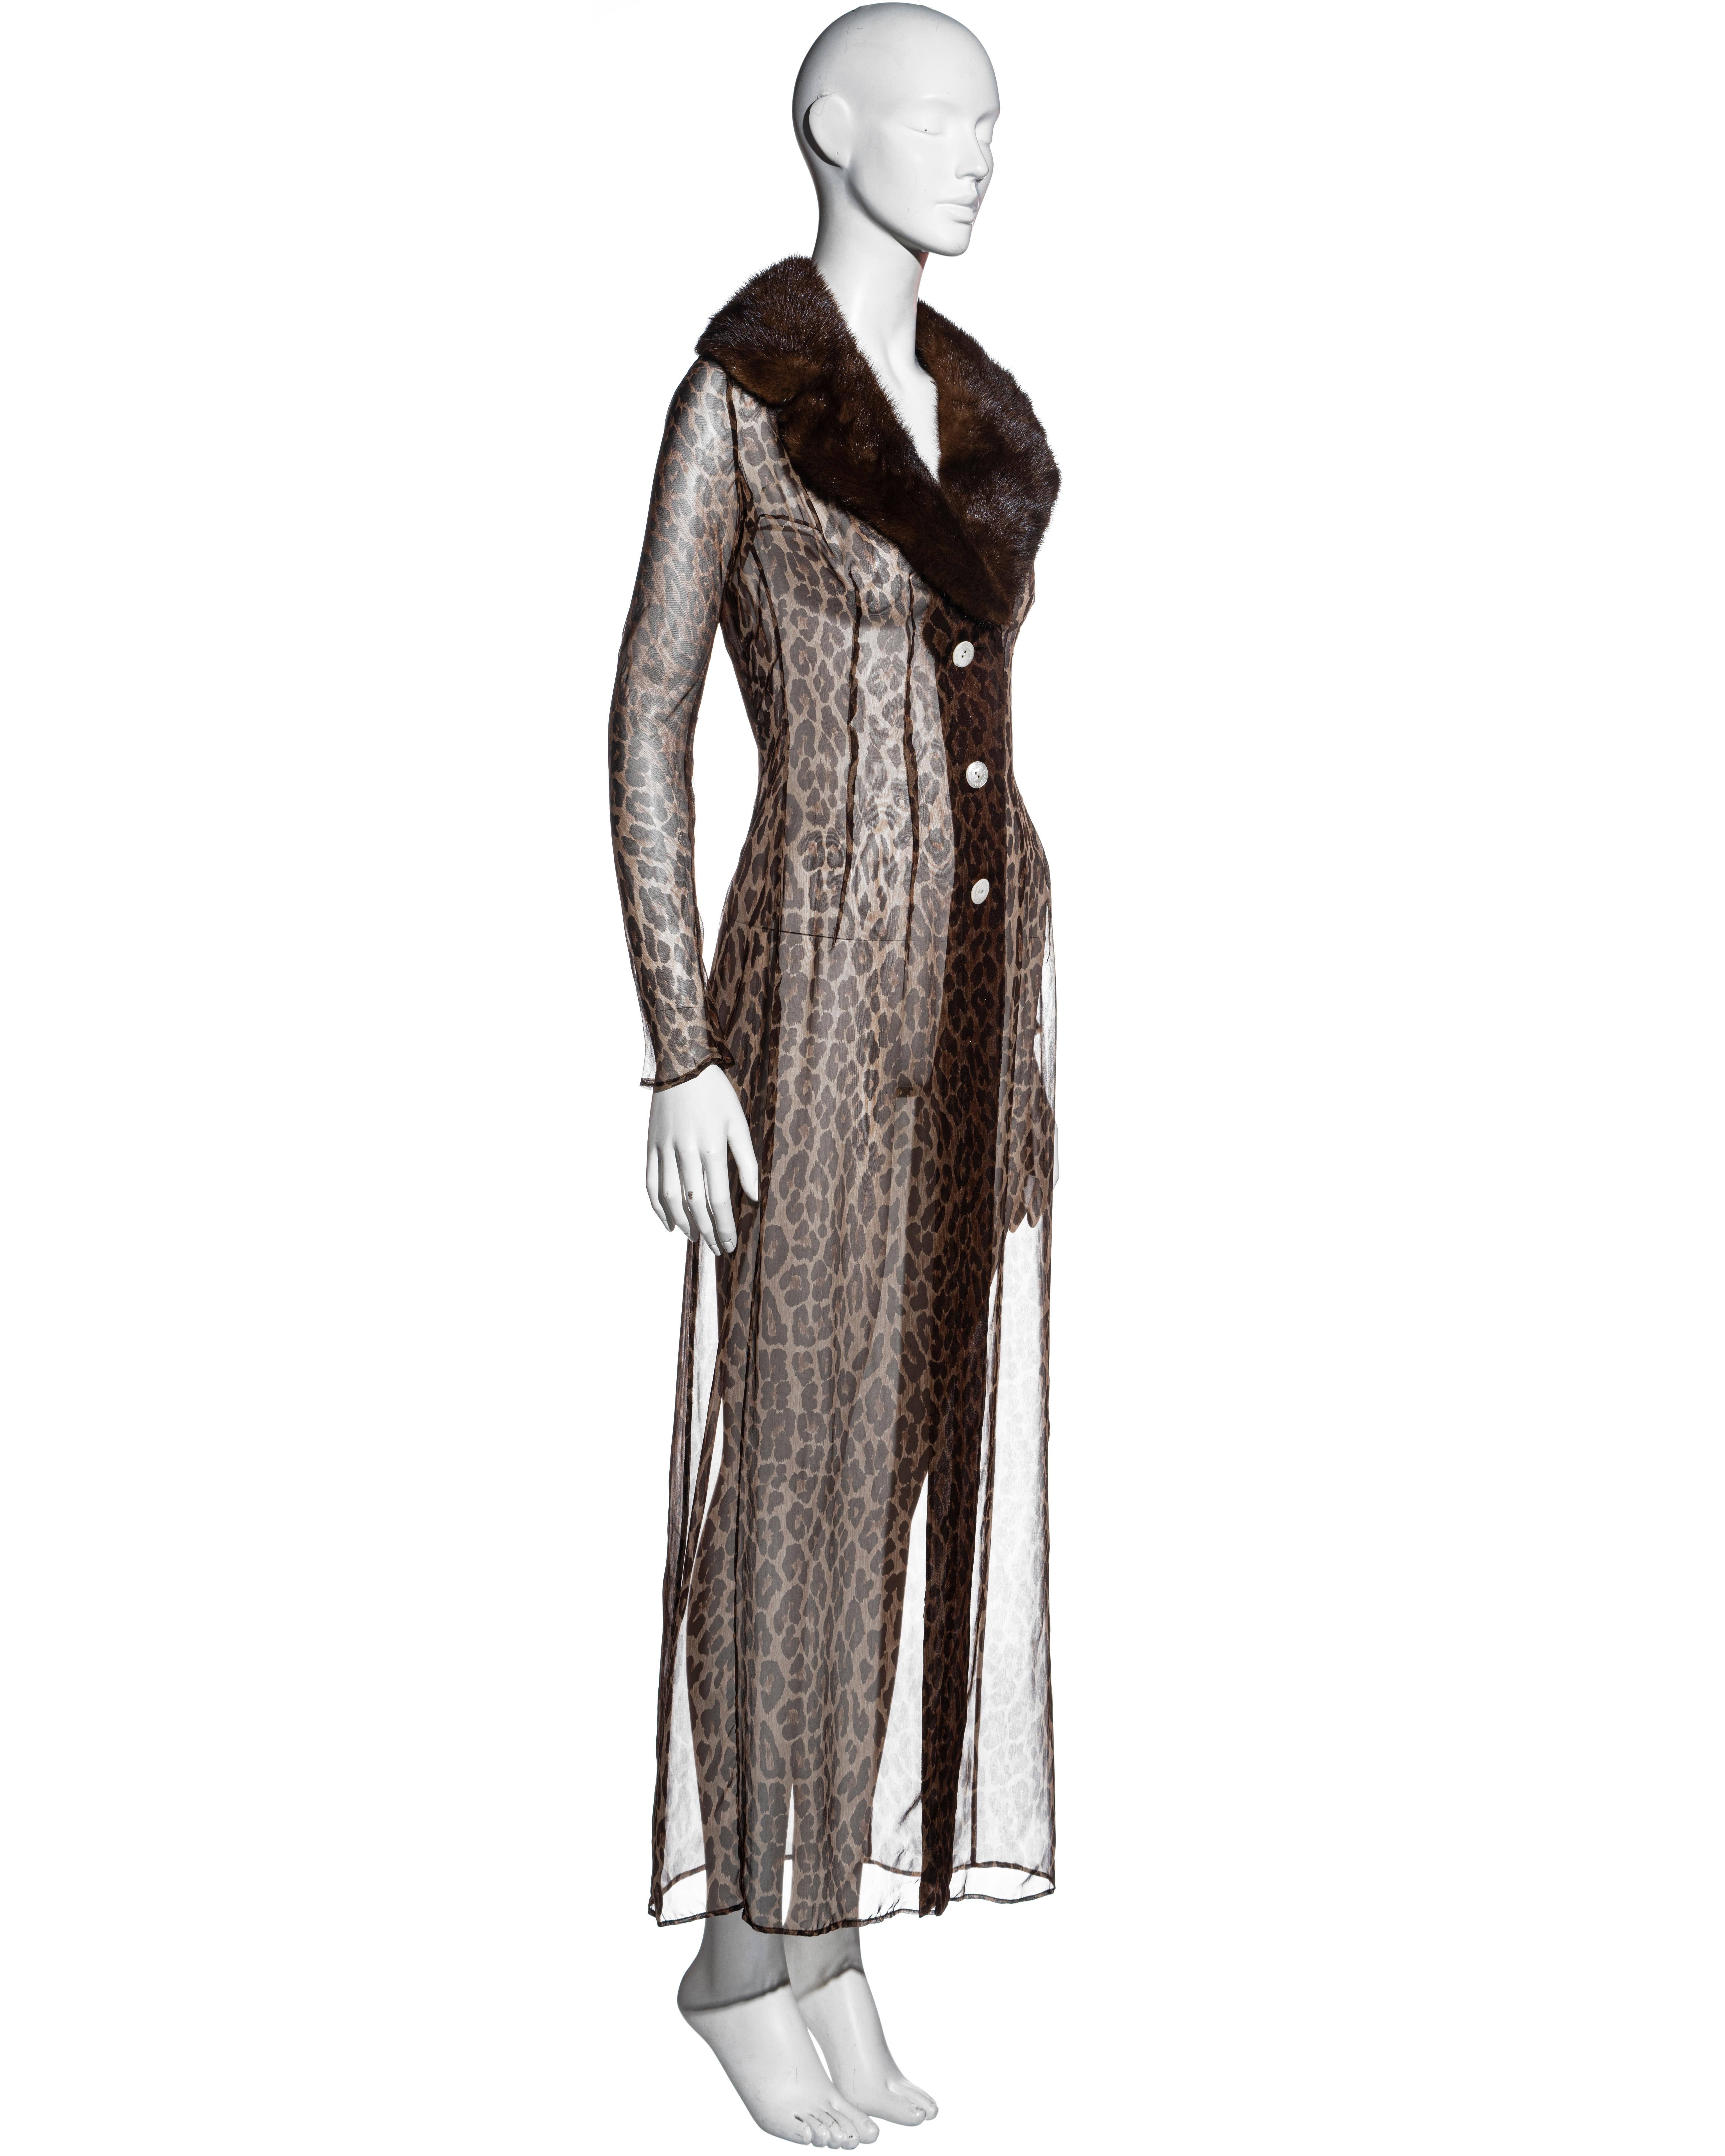 Dolce & Gabbana leopard print silk chiffon dress coat with fur collar, ss 1997 1